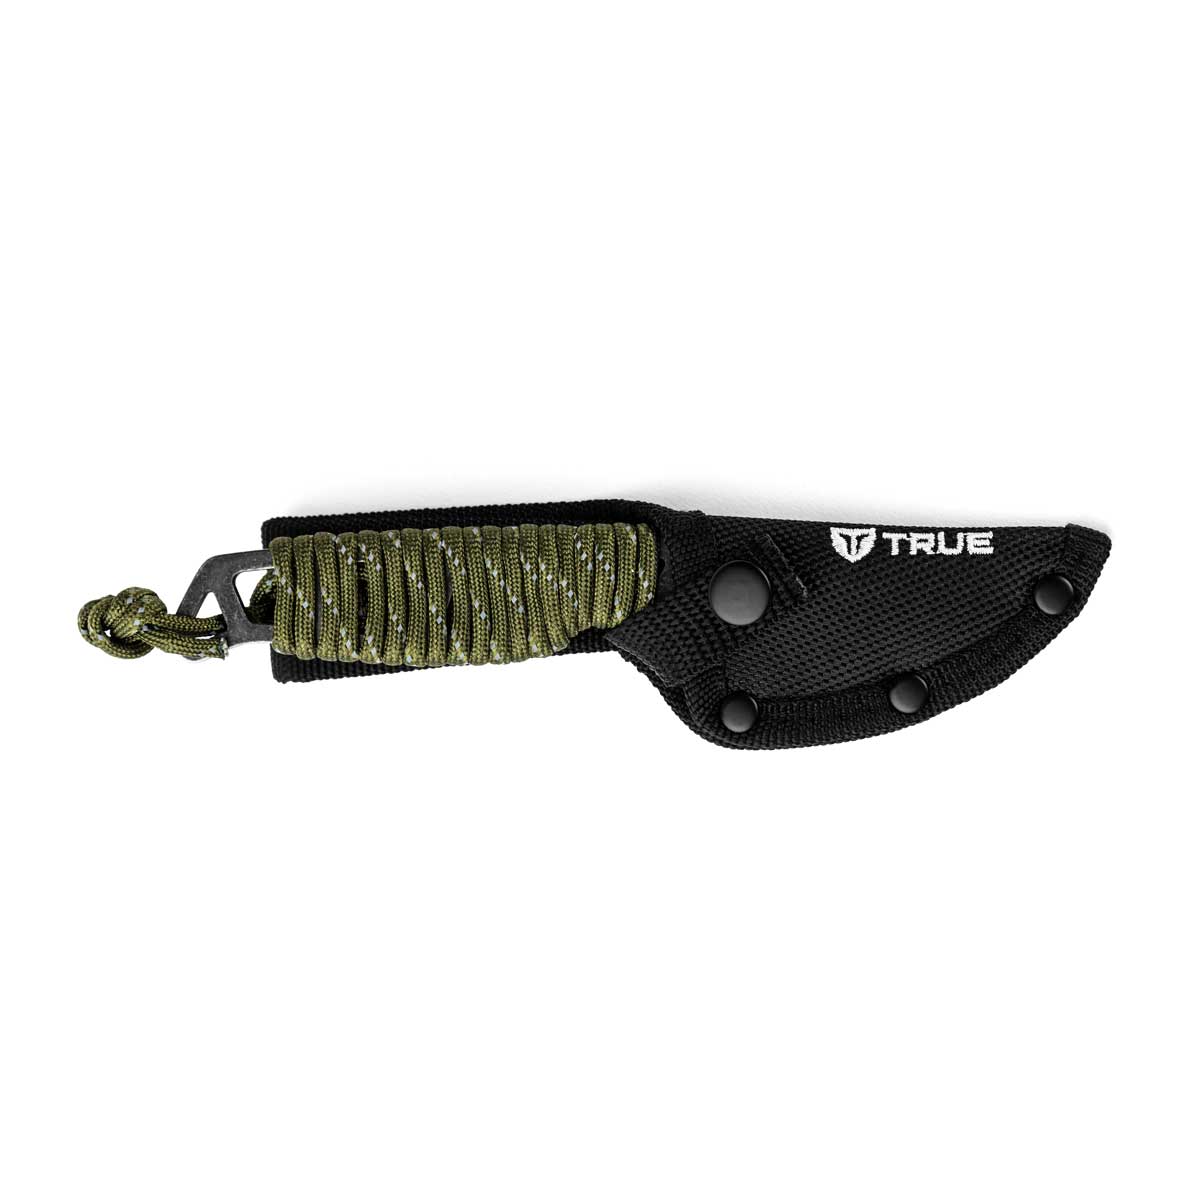 True Nekkid Fixed Blade Knife - The Tool Store